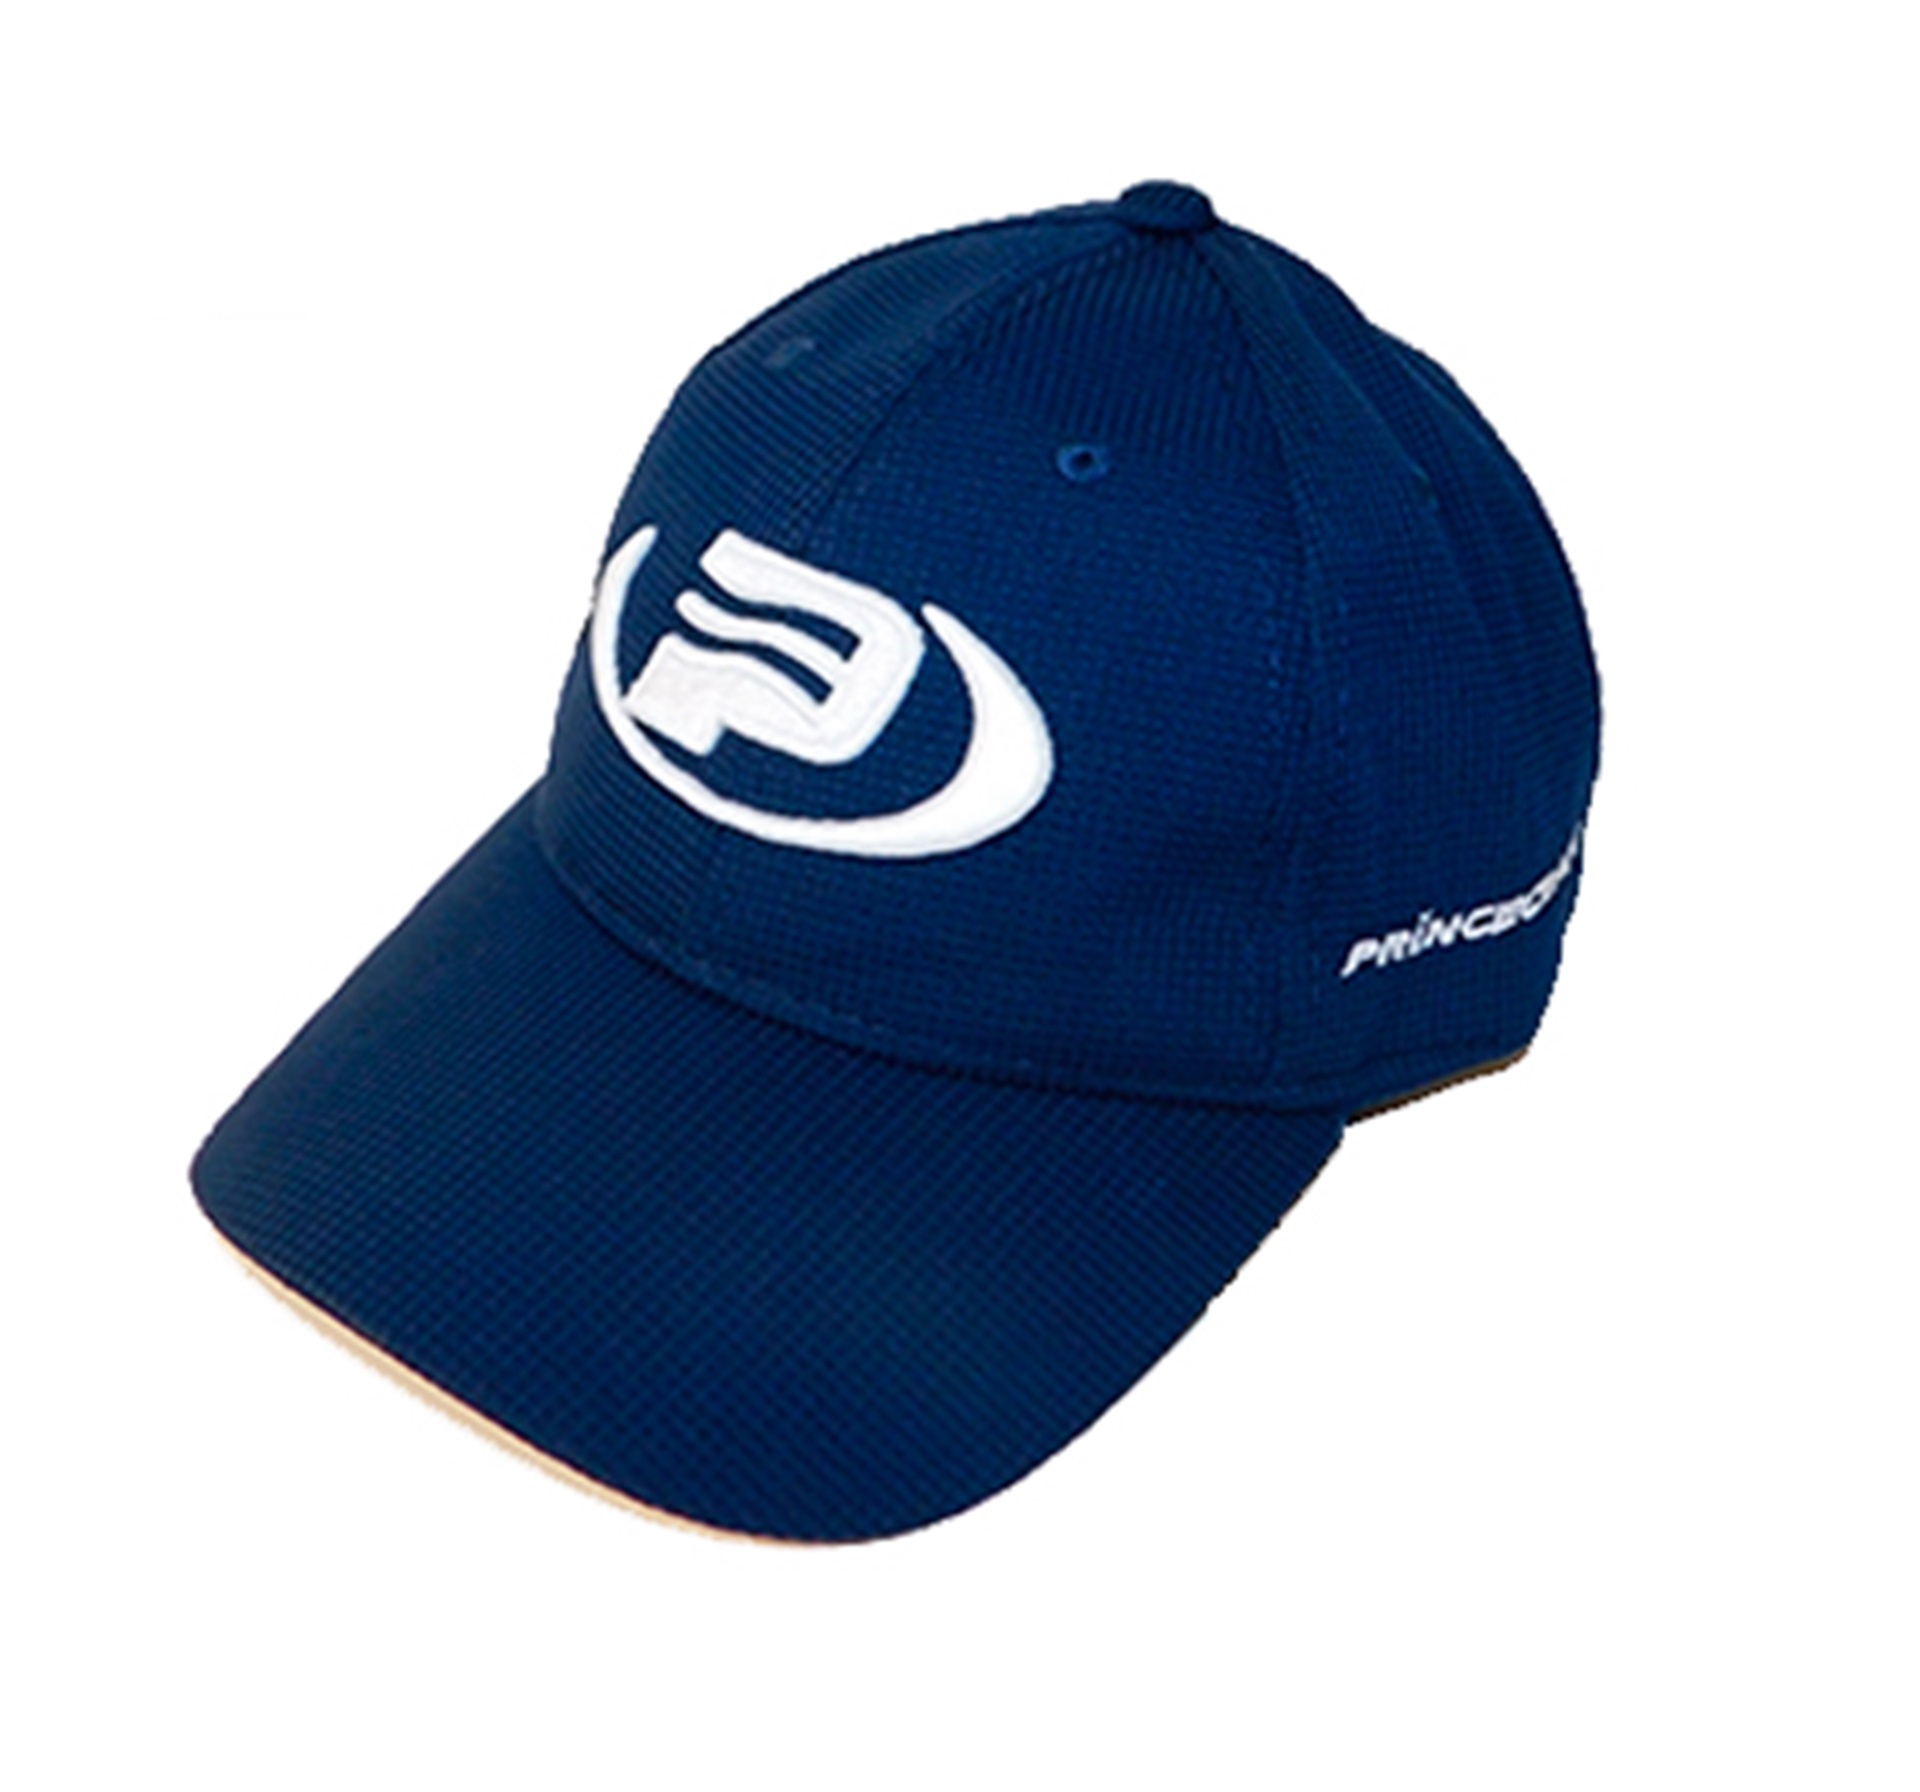 navy-hat-with-3d-white-logo-princecraft-store-princecraft